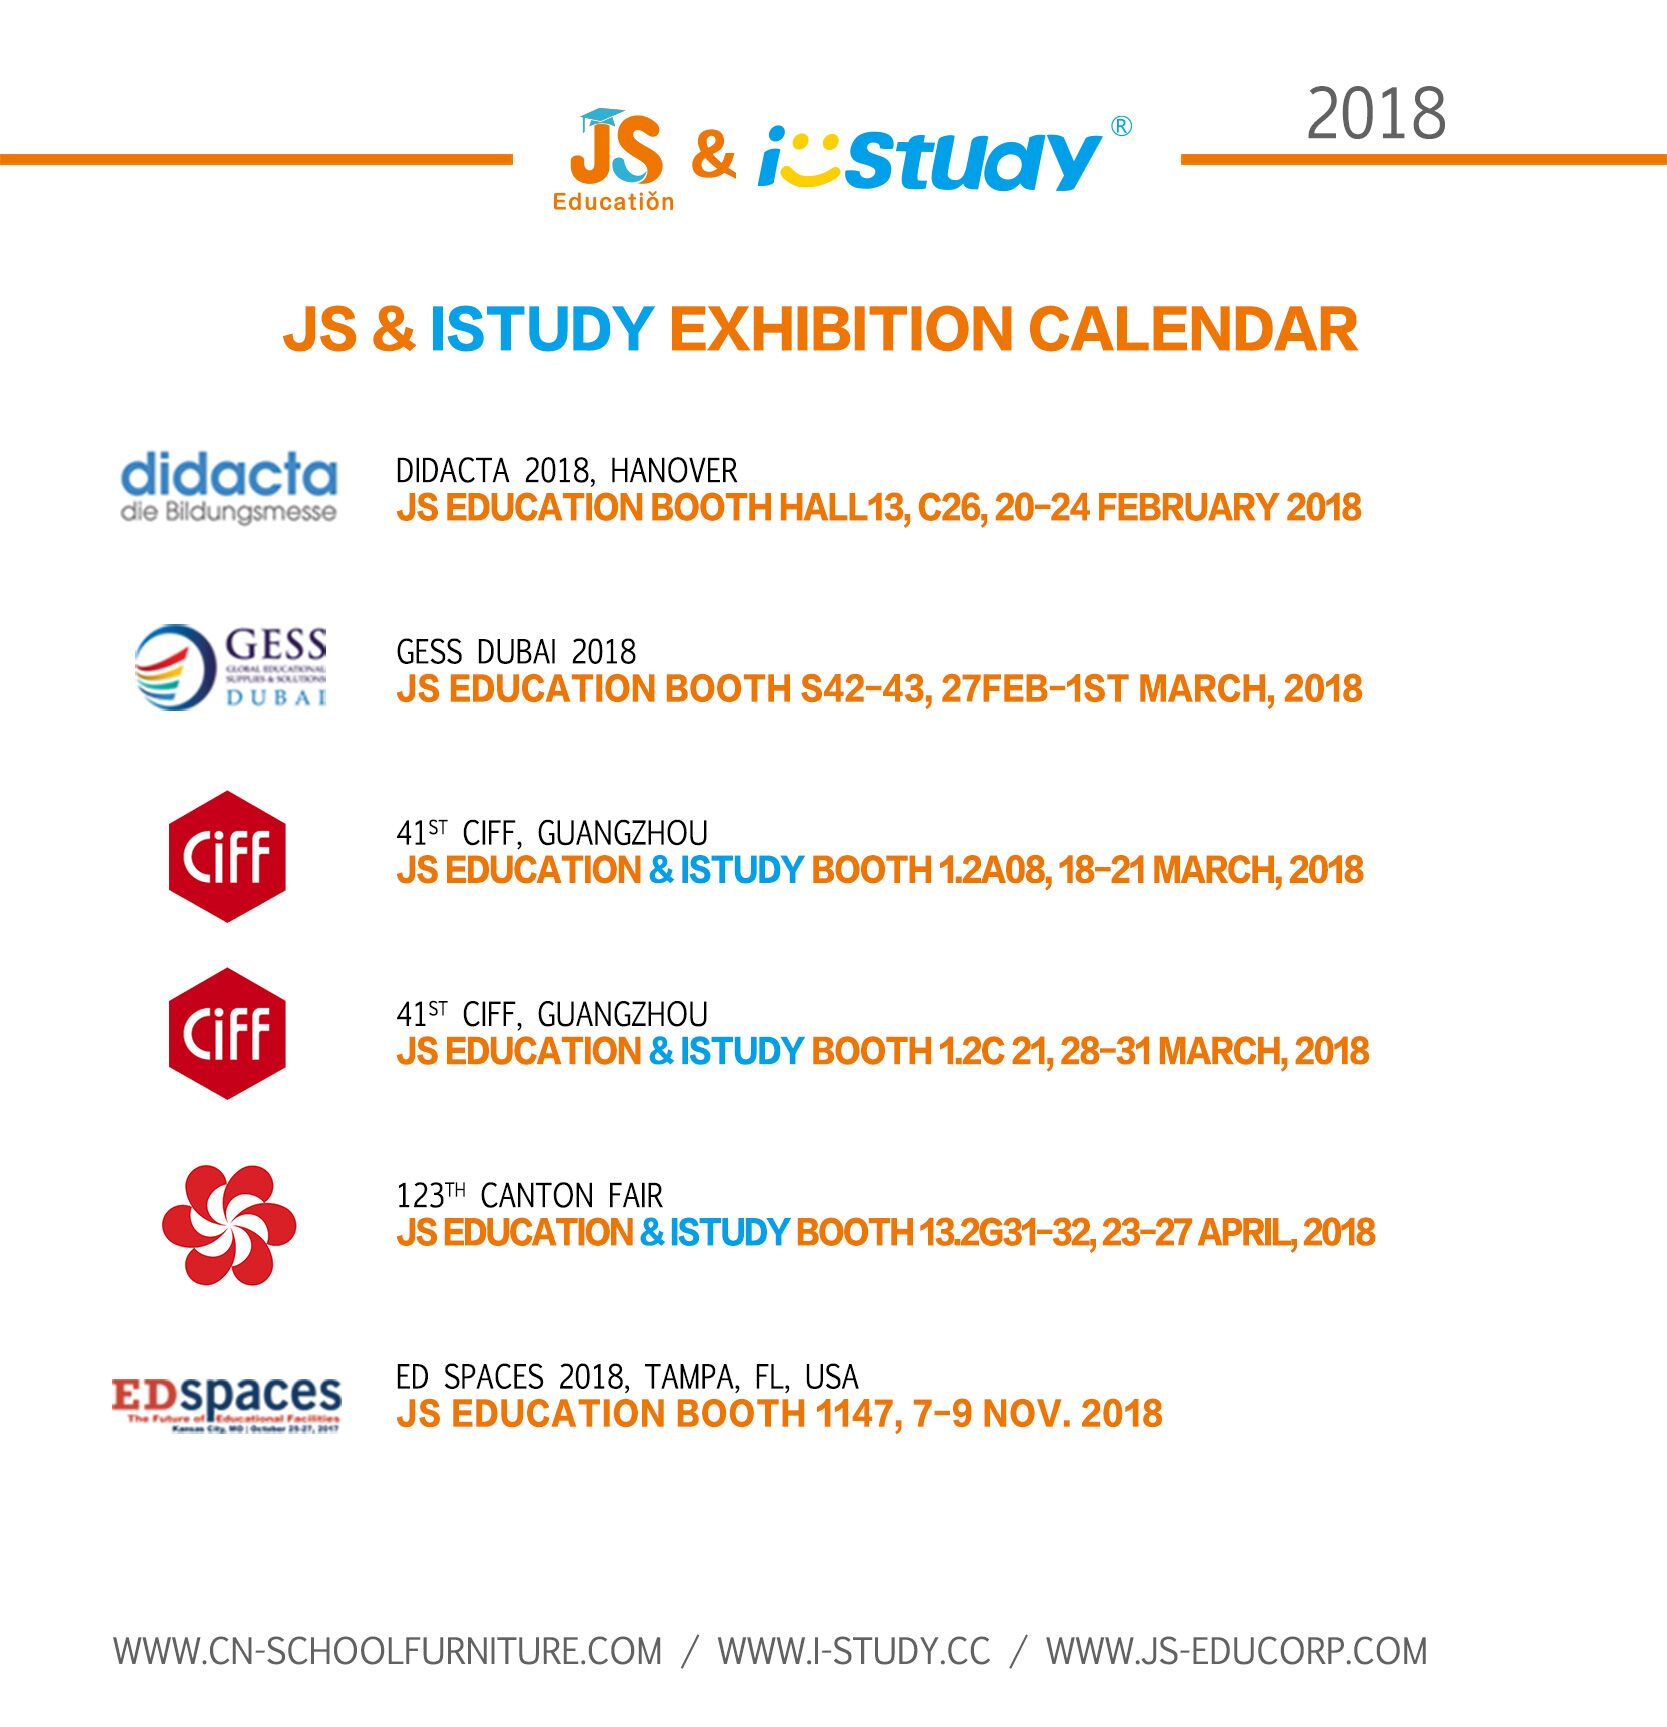 Exhibition Calendar In 2018